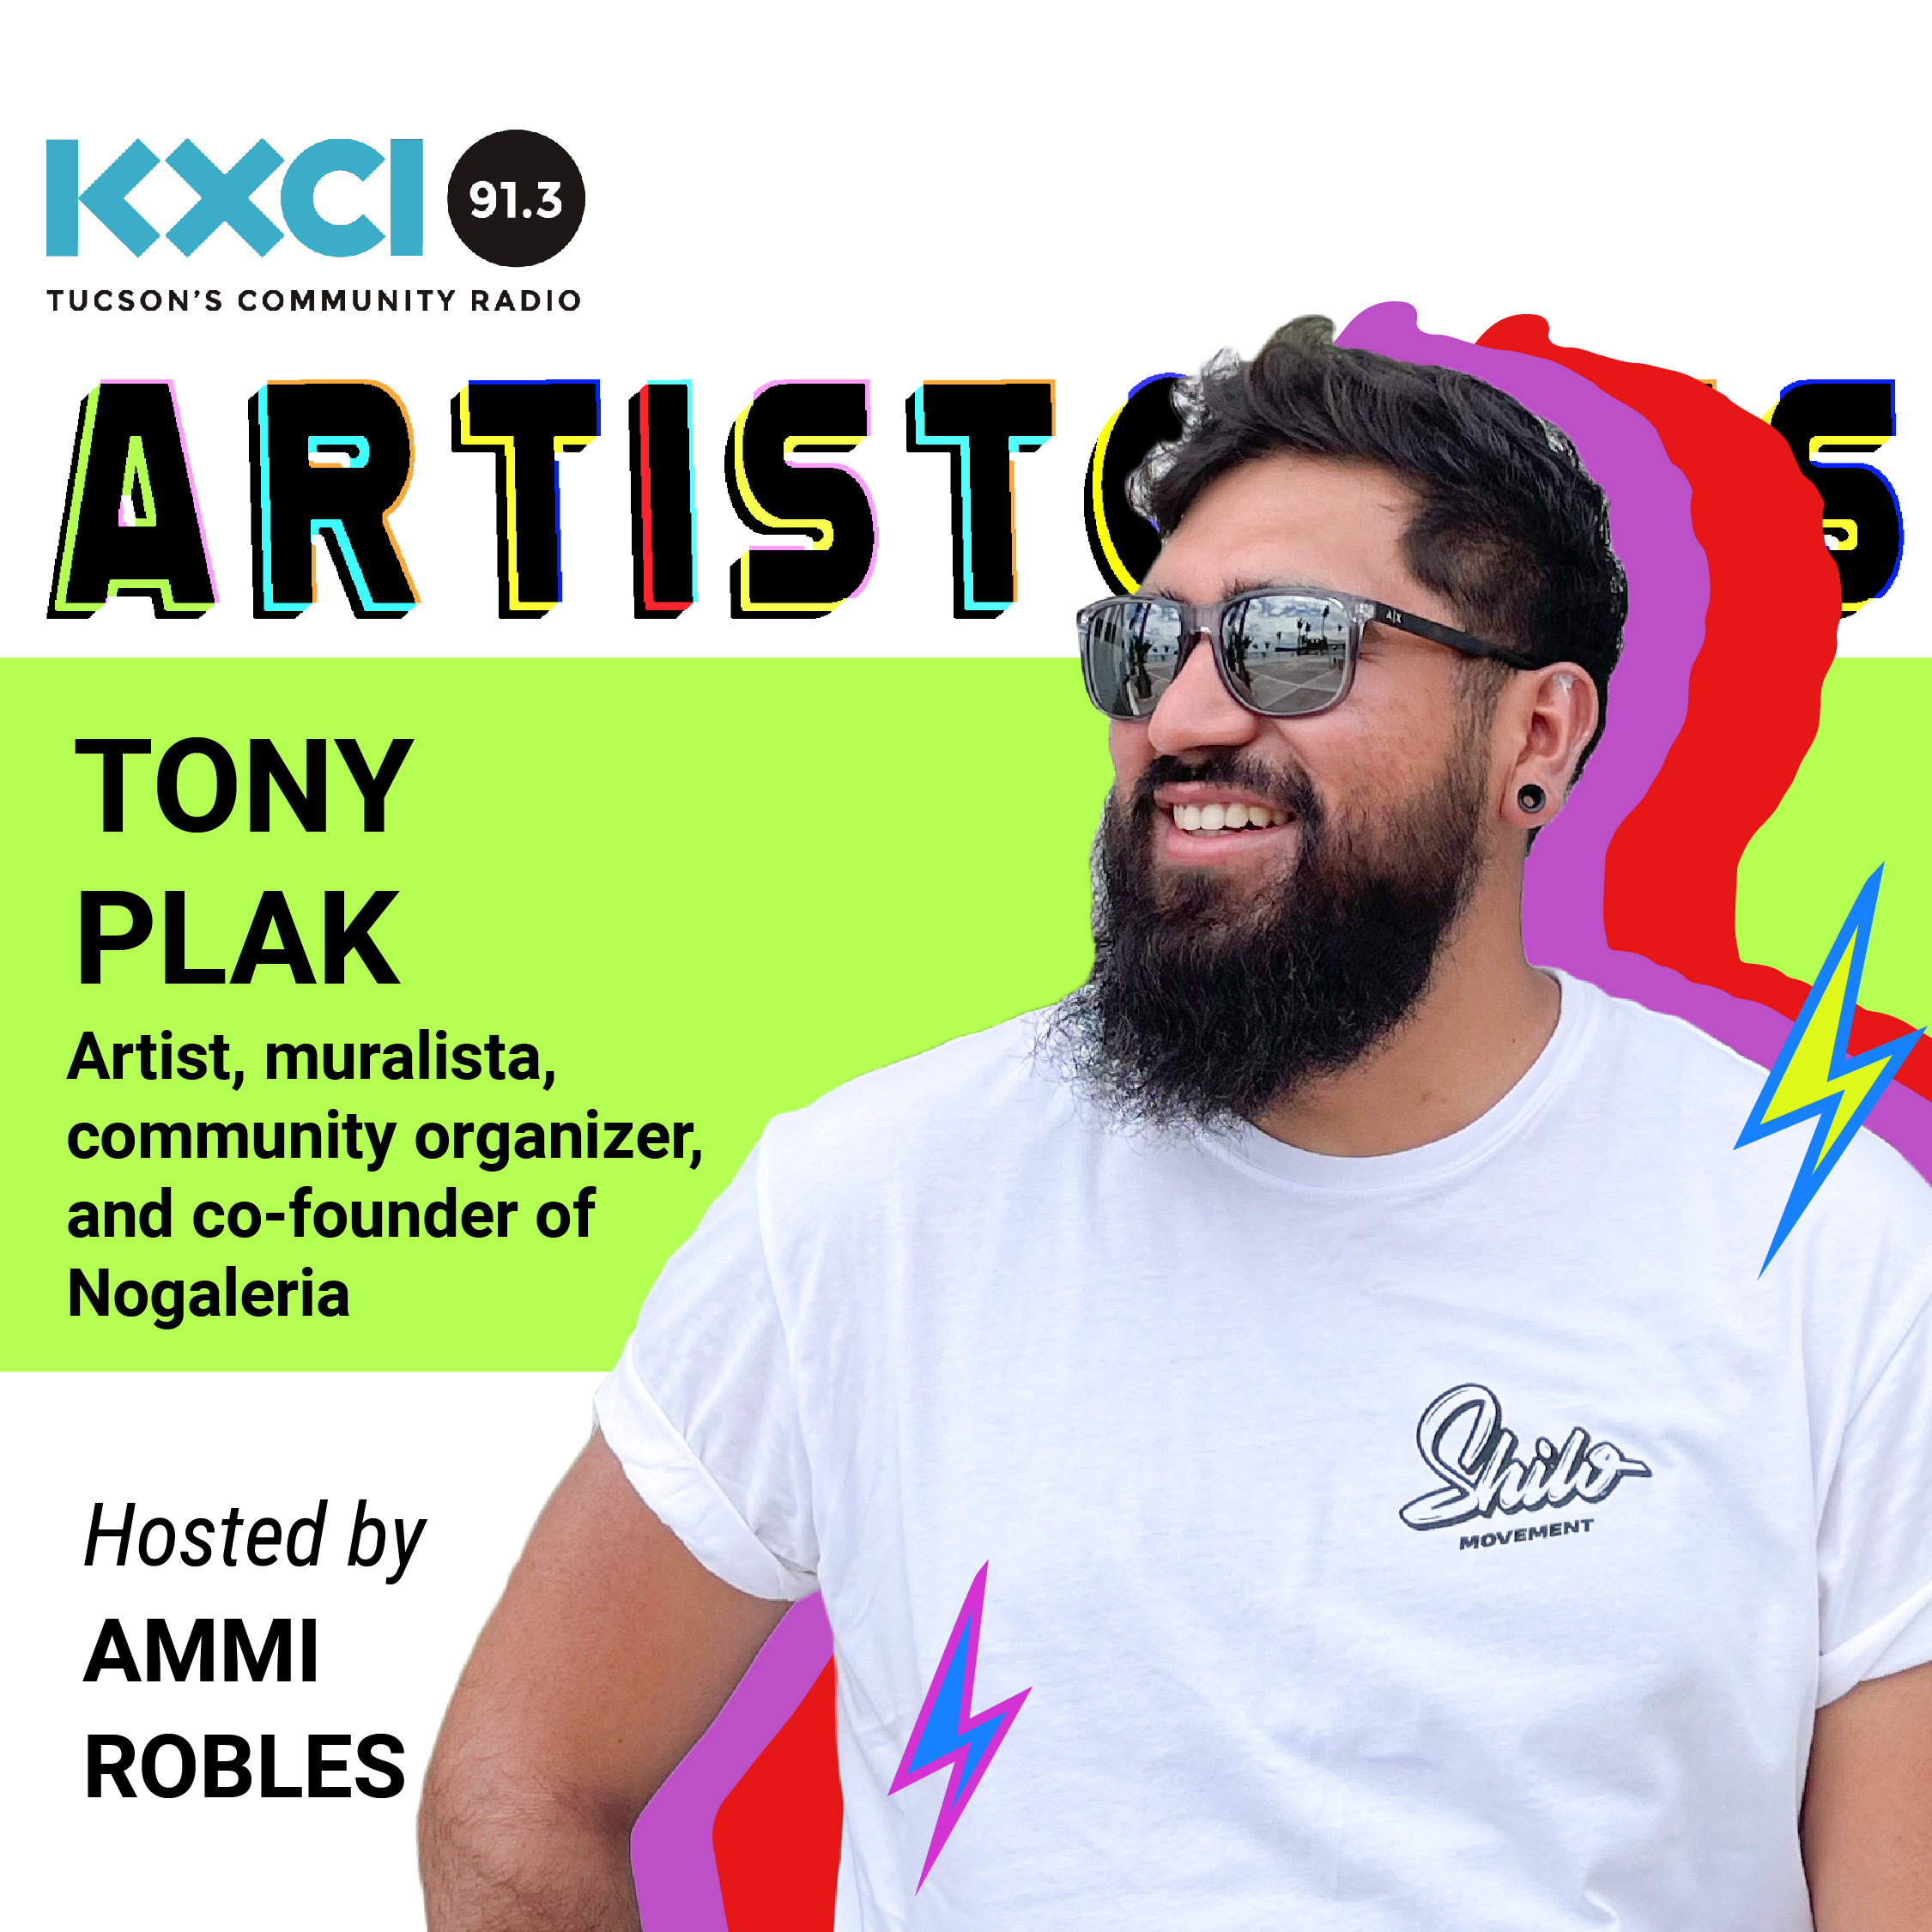 Tony Plak - Artist, muralista, community organizer and co-founder of Nogaleria